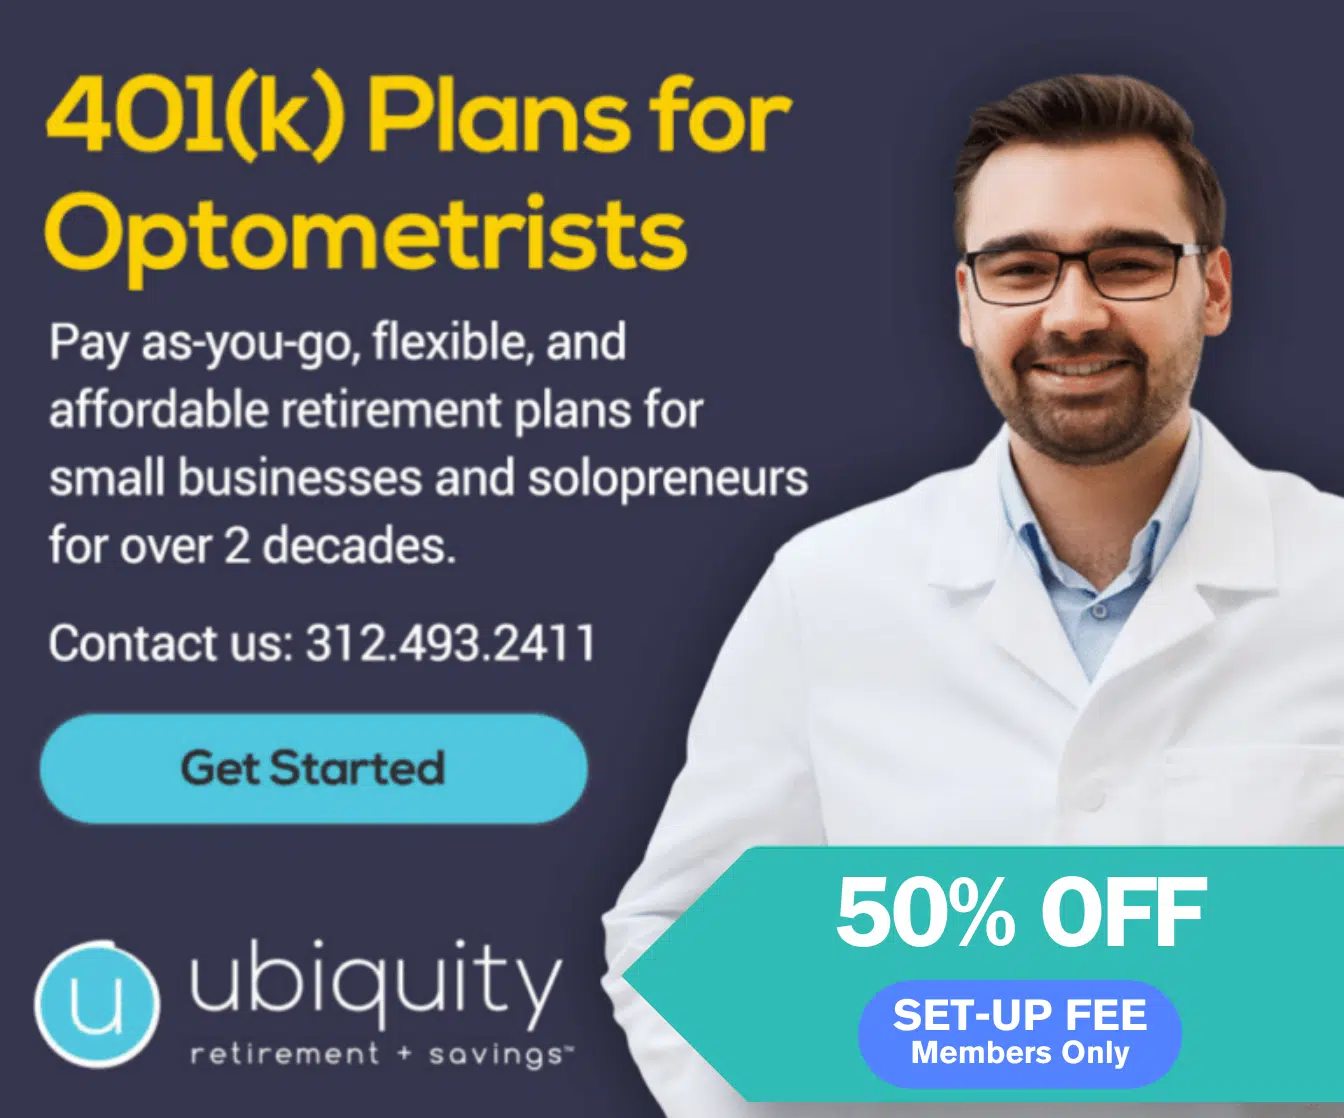 401K Ubiquity Plan 50% PROMO (2)